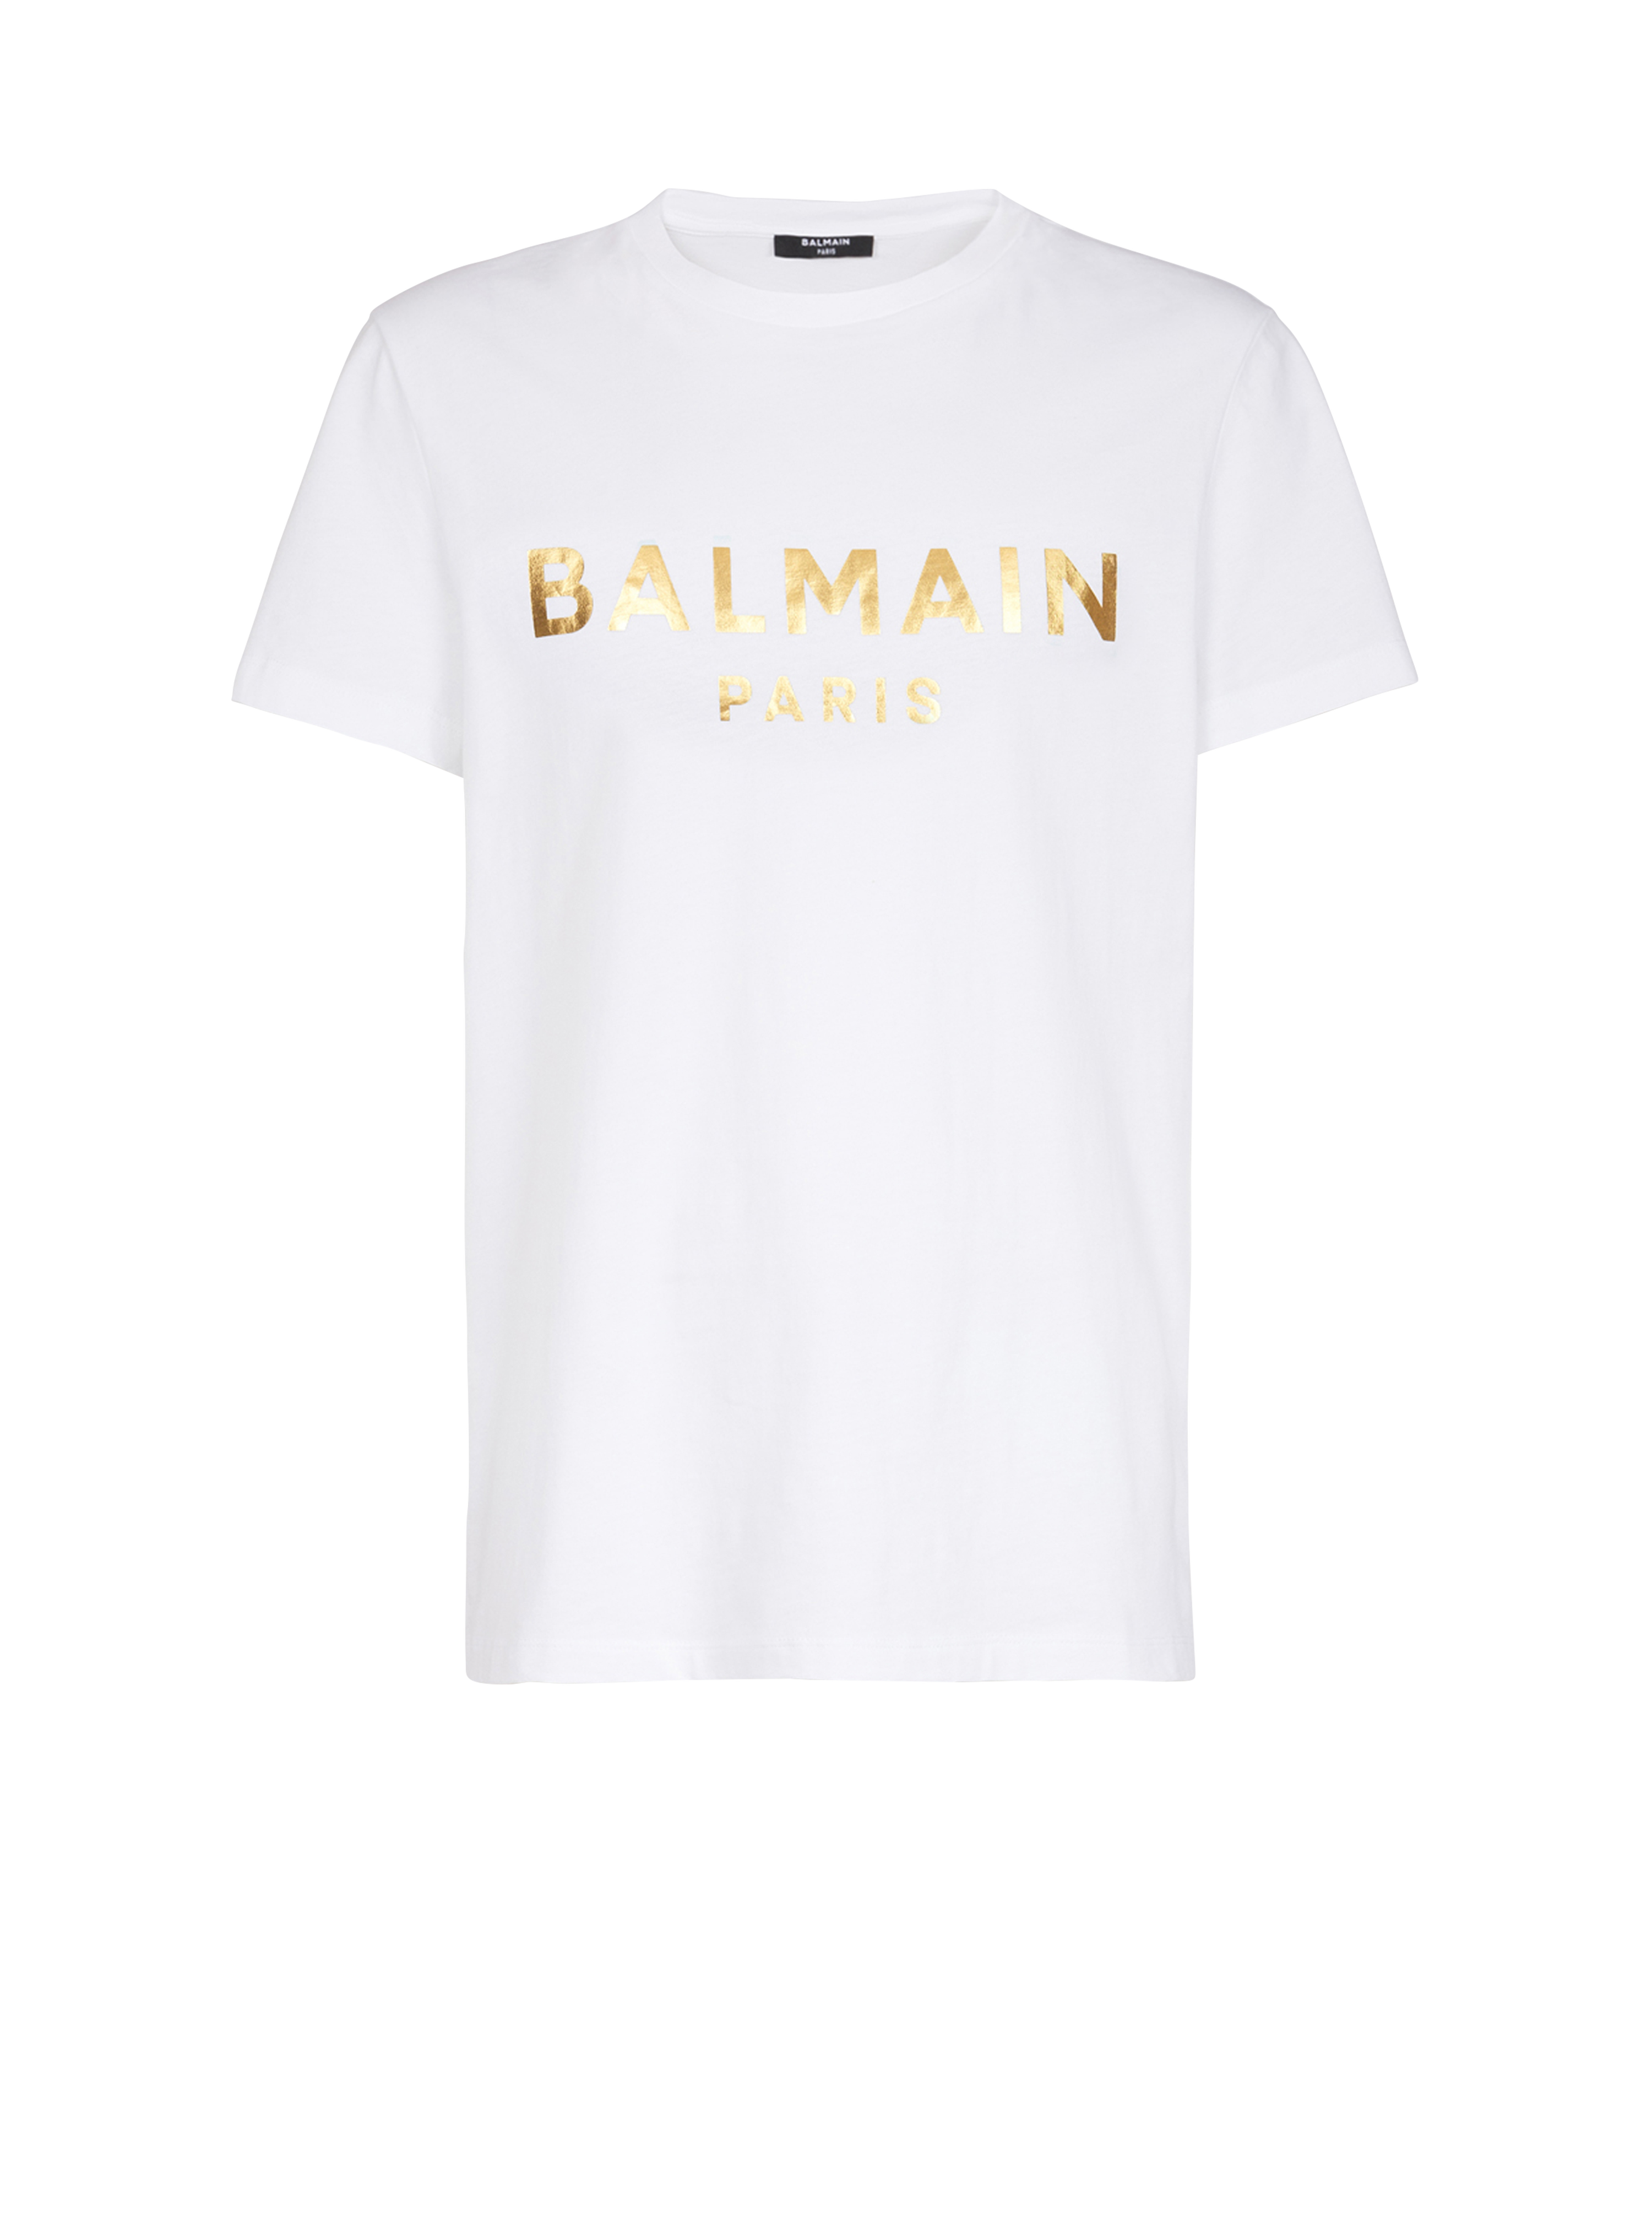 Eco-designed cotton T-shirt with Balmain Paris logo print, white